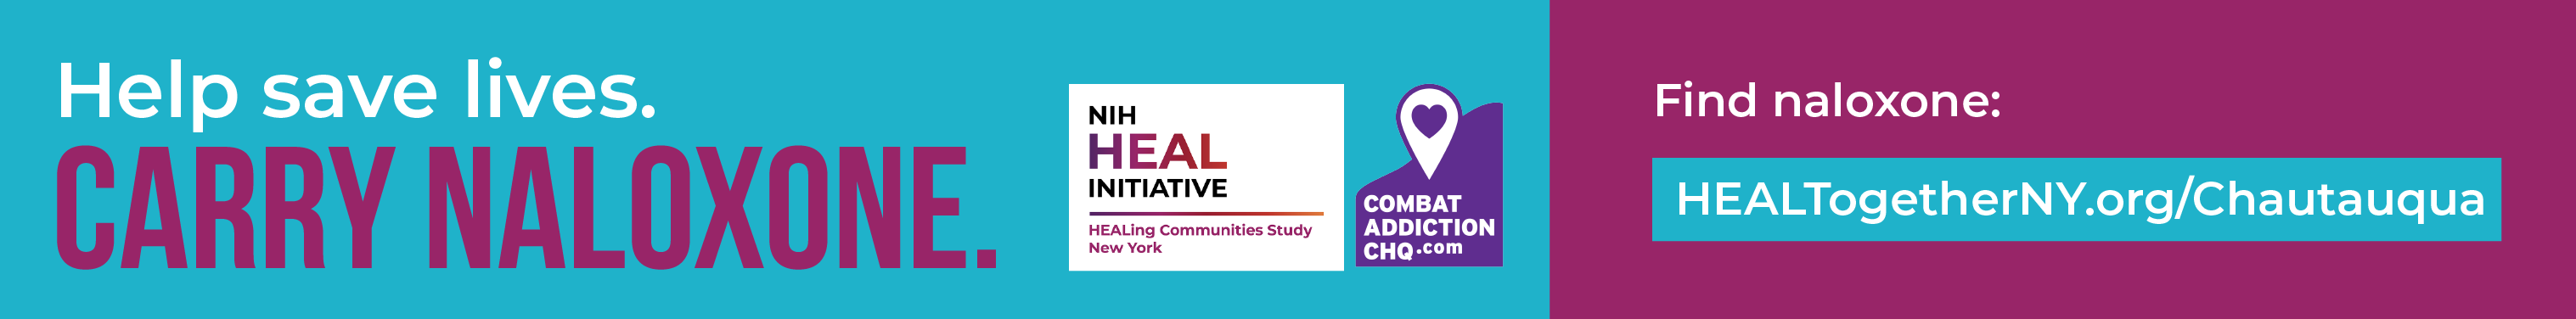 Help save lives. Carry Naloxone. NIH HEAL Initiative. HEALing Communities Study New York. Combat Addiction CHQ. Find naloxone: HEALTogetherNY.org/Chautauqua